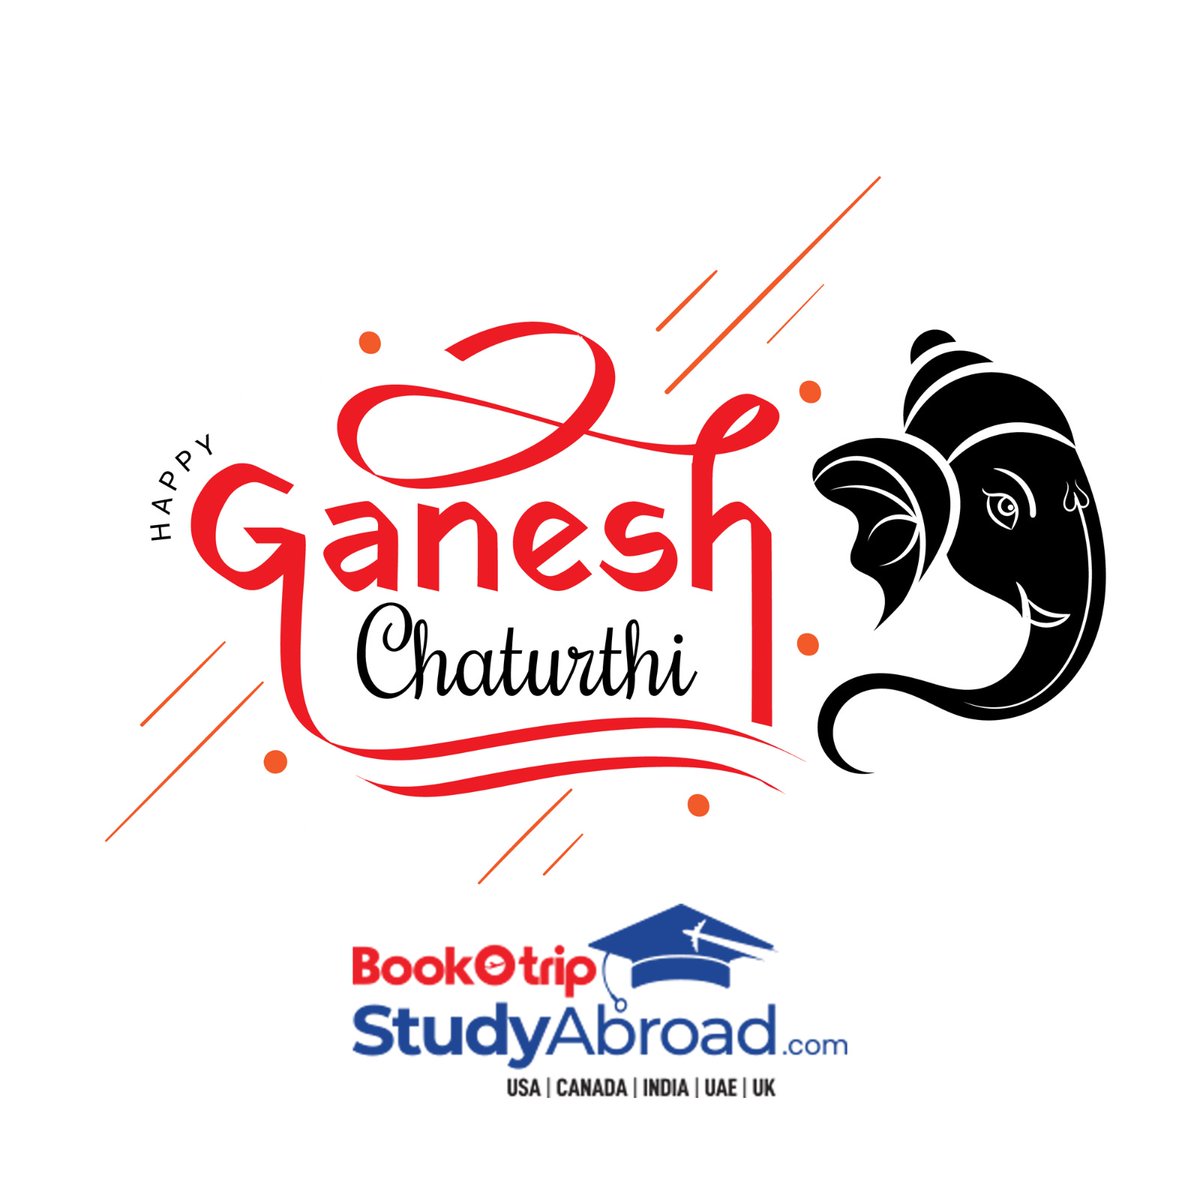 Wishing You Academic Success and Cultural Exploration - Happy Ganesh Chaturthi!

#GaneshChaturthiCelebrations #GaneshChaturthiVibes #GaneshChaturthiWishes #studyabroad #education #ielts #studyincanada #study #canada #studyinuk #university #studentvisa #studyvisa #studyoverseas